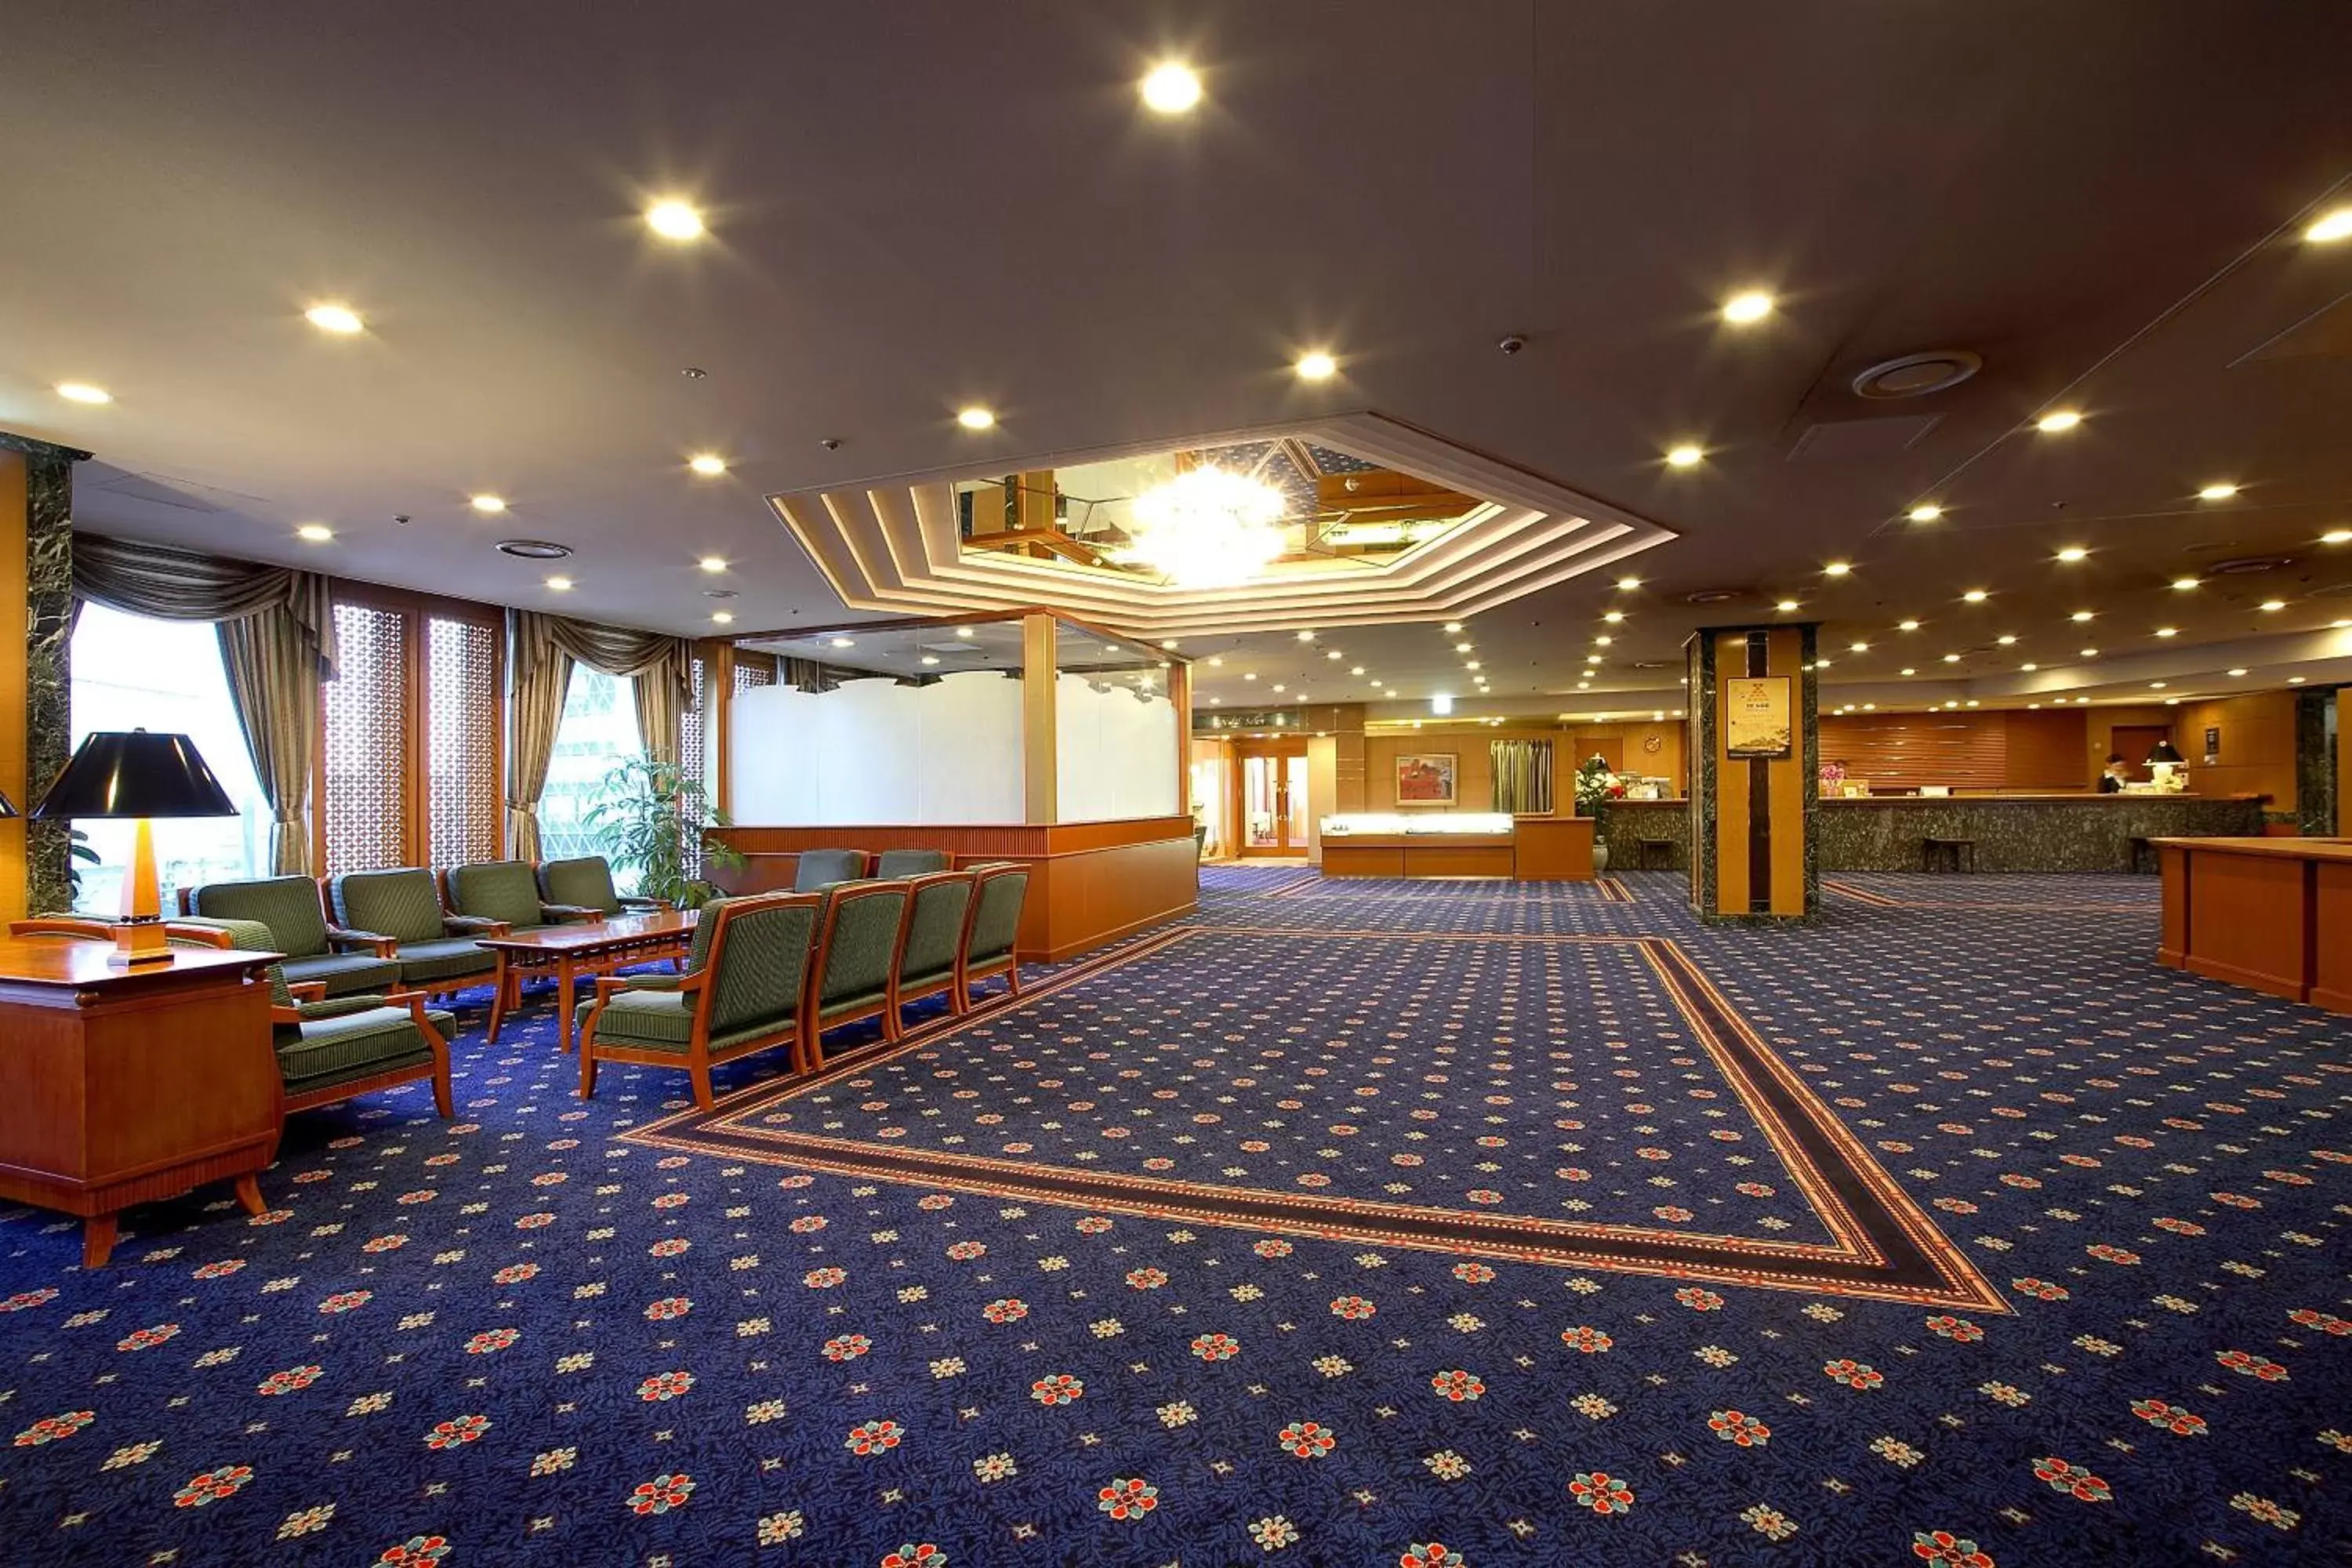 Lobby or reception in Meitetsu Grand Hotel